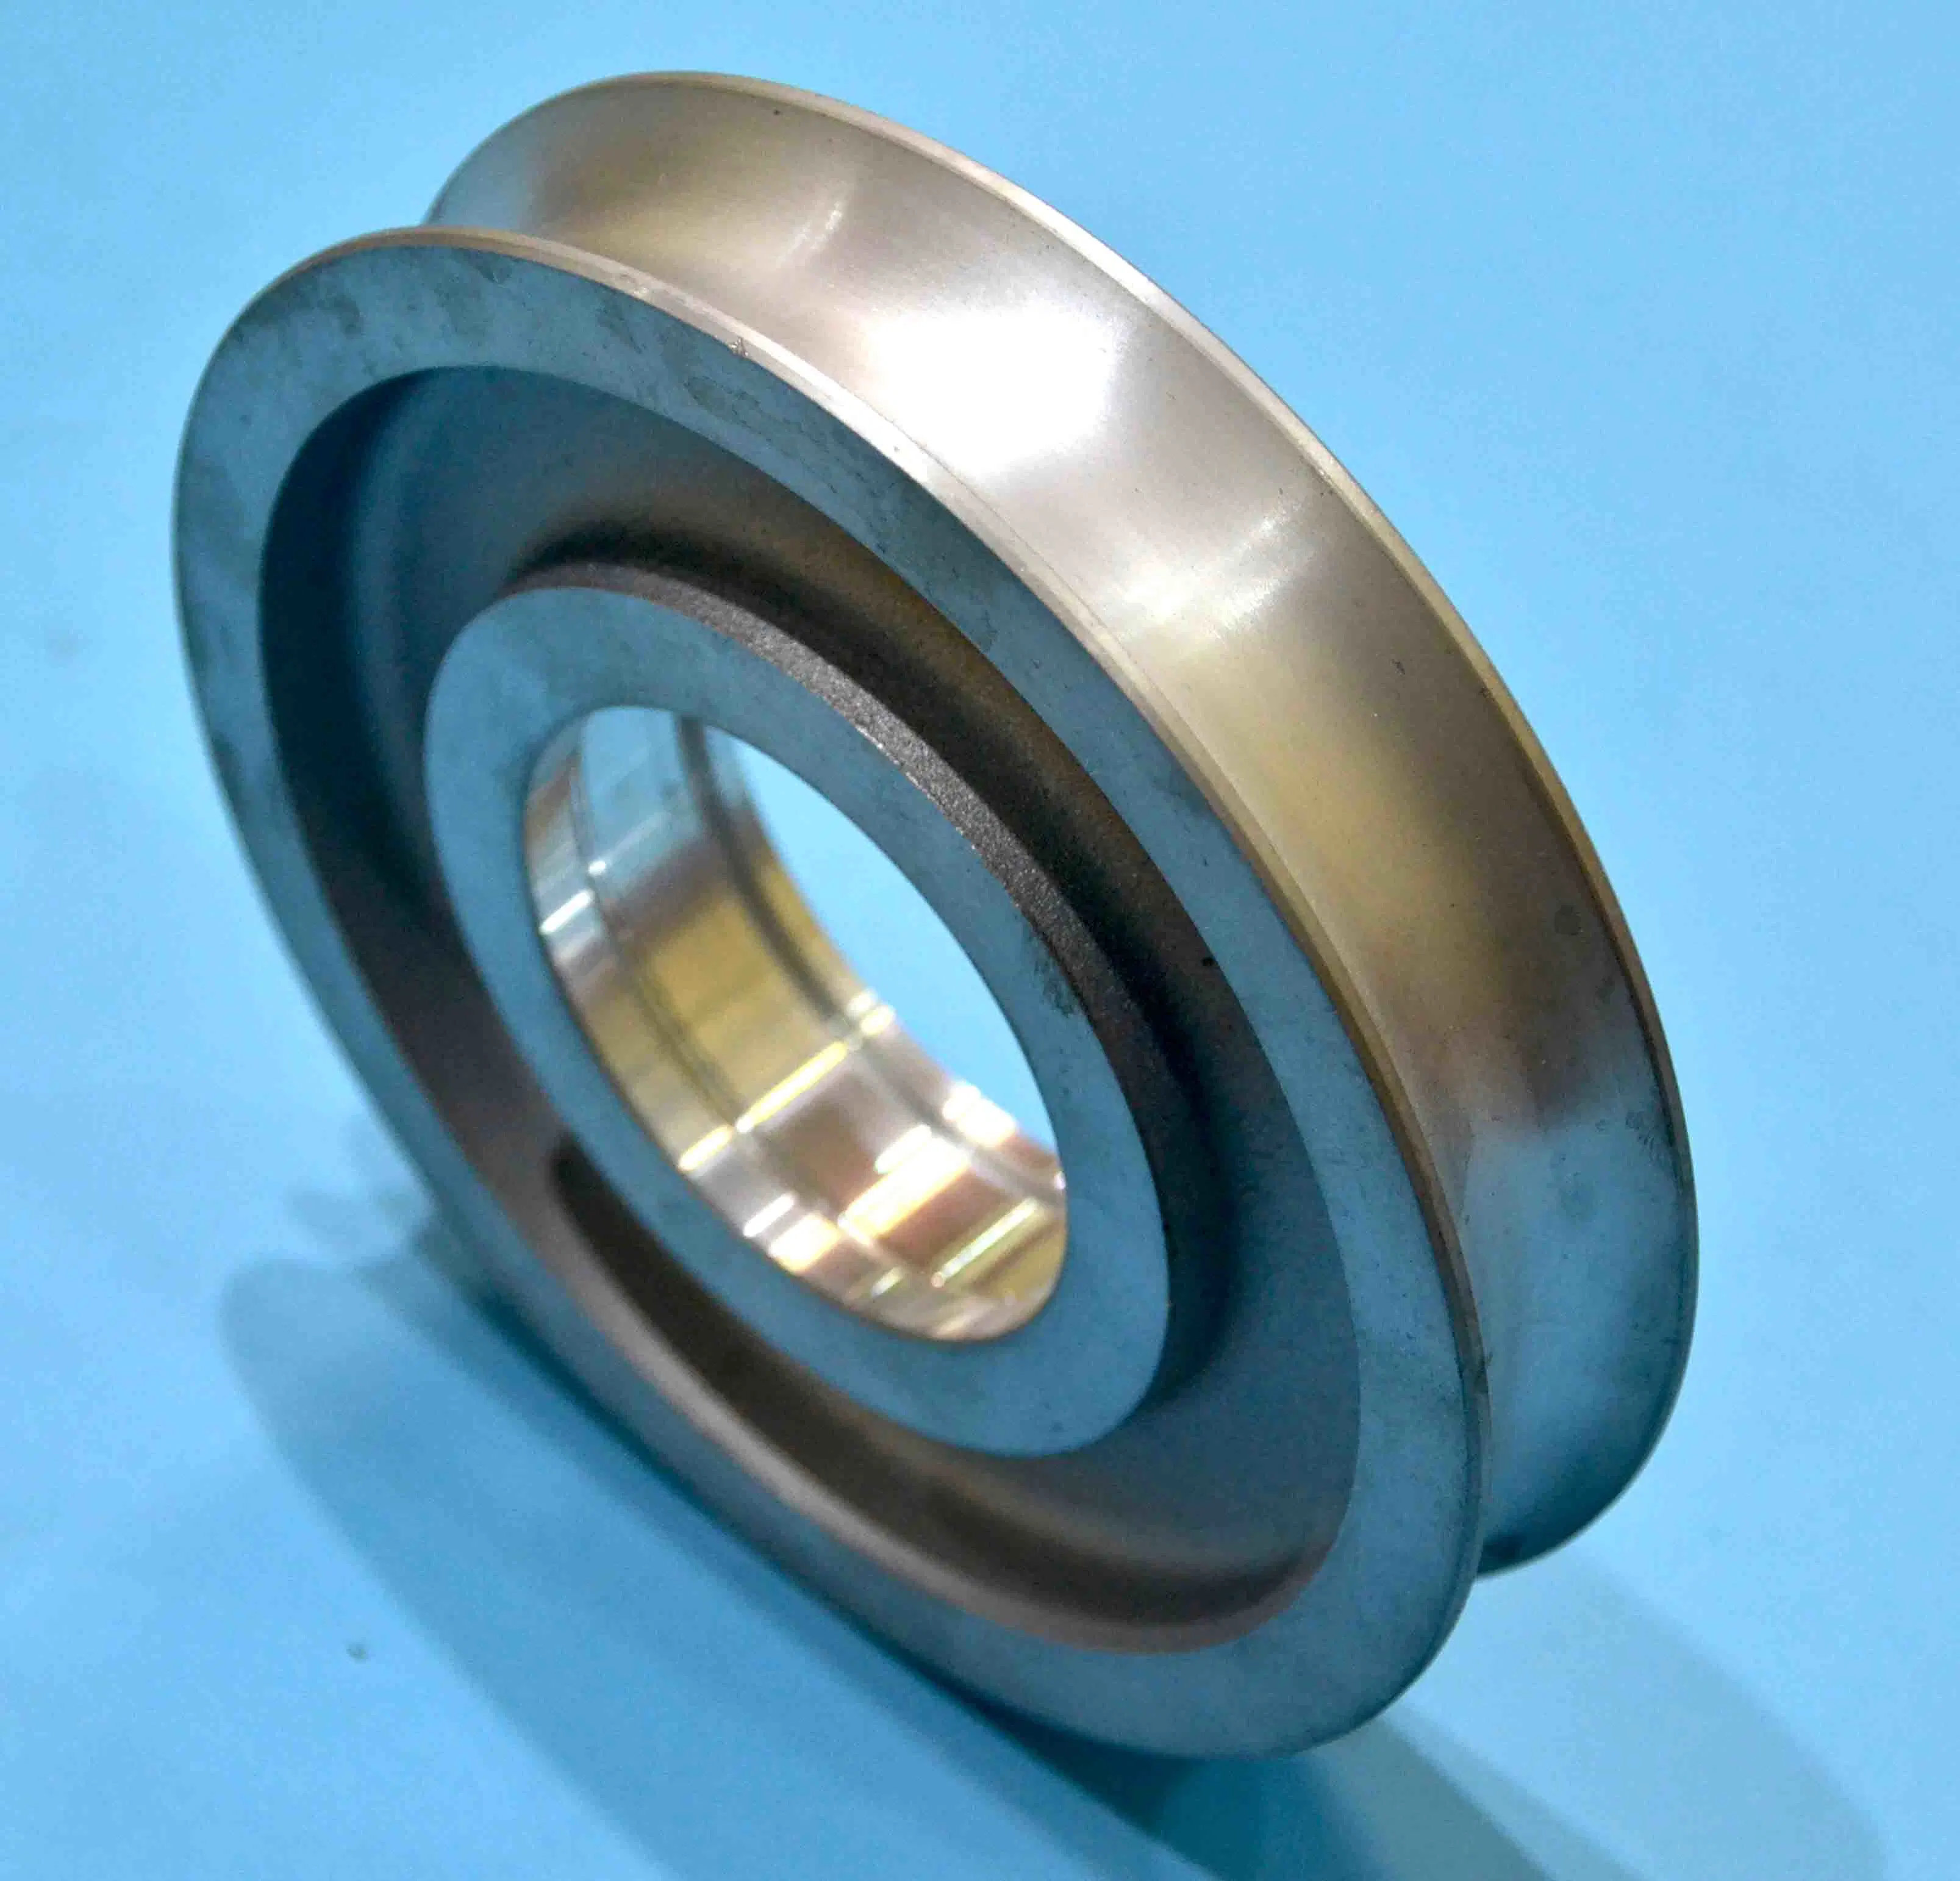 Aluminum Die Casting Wheel for Polyurethane Casters